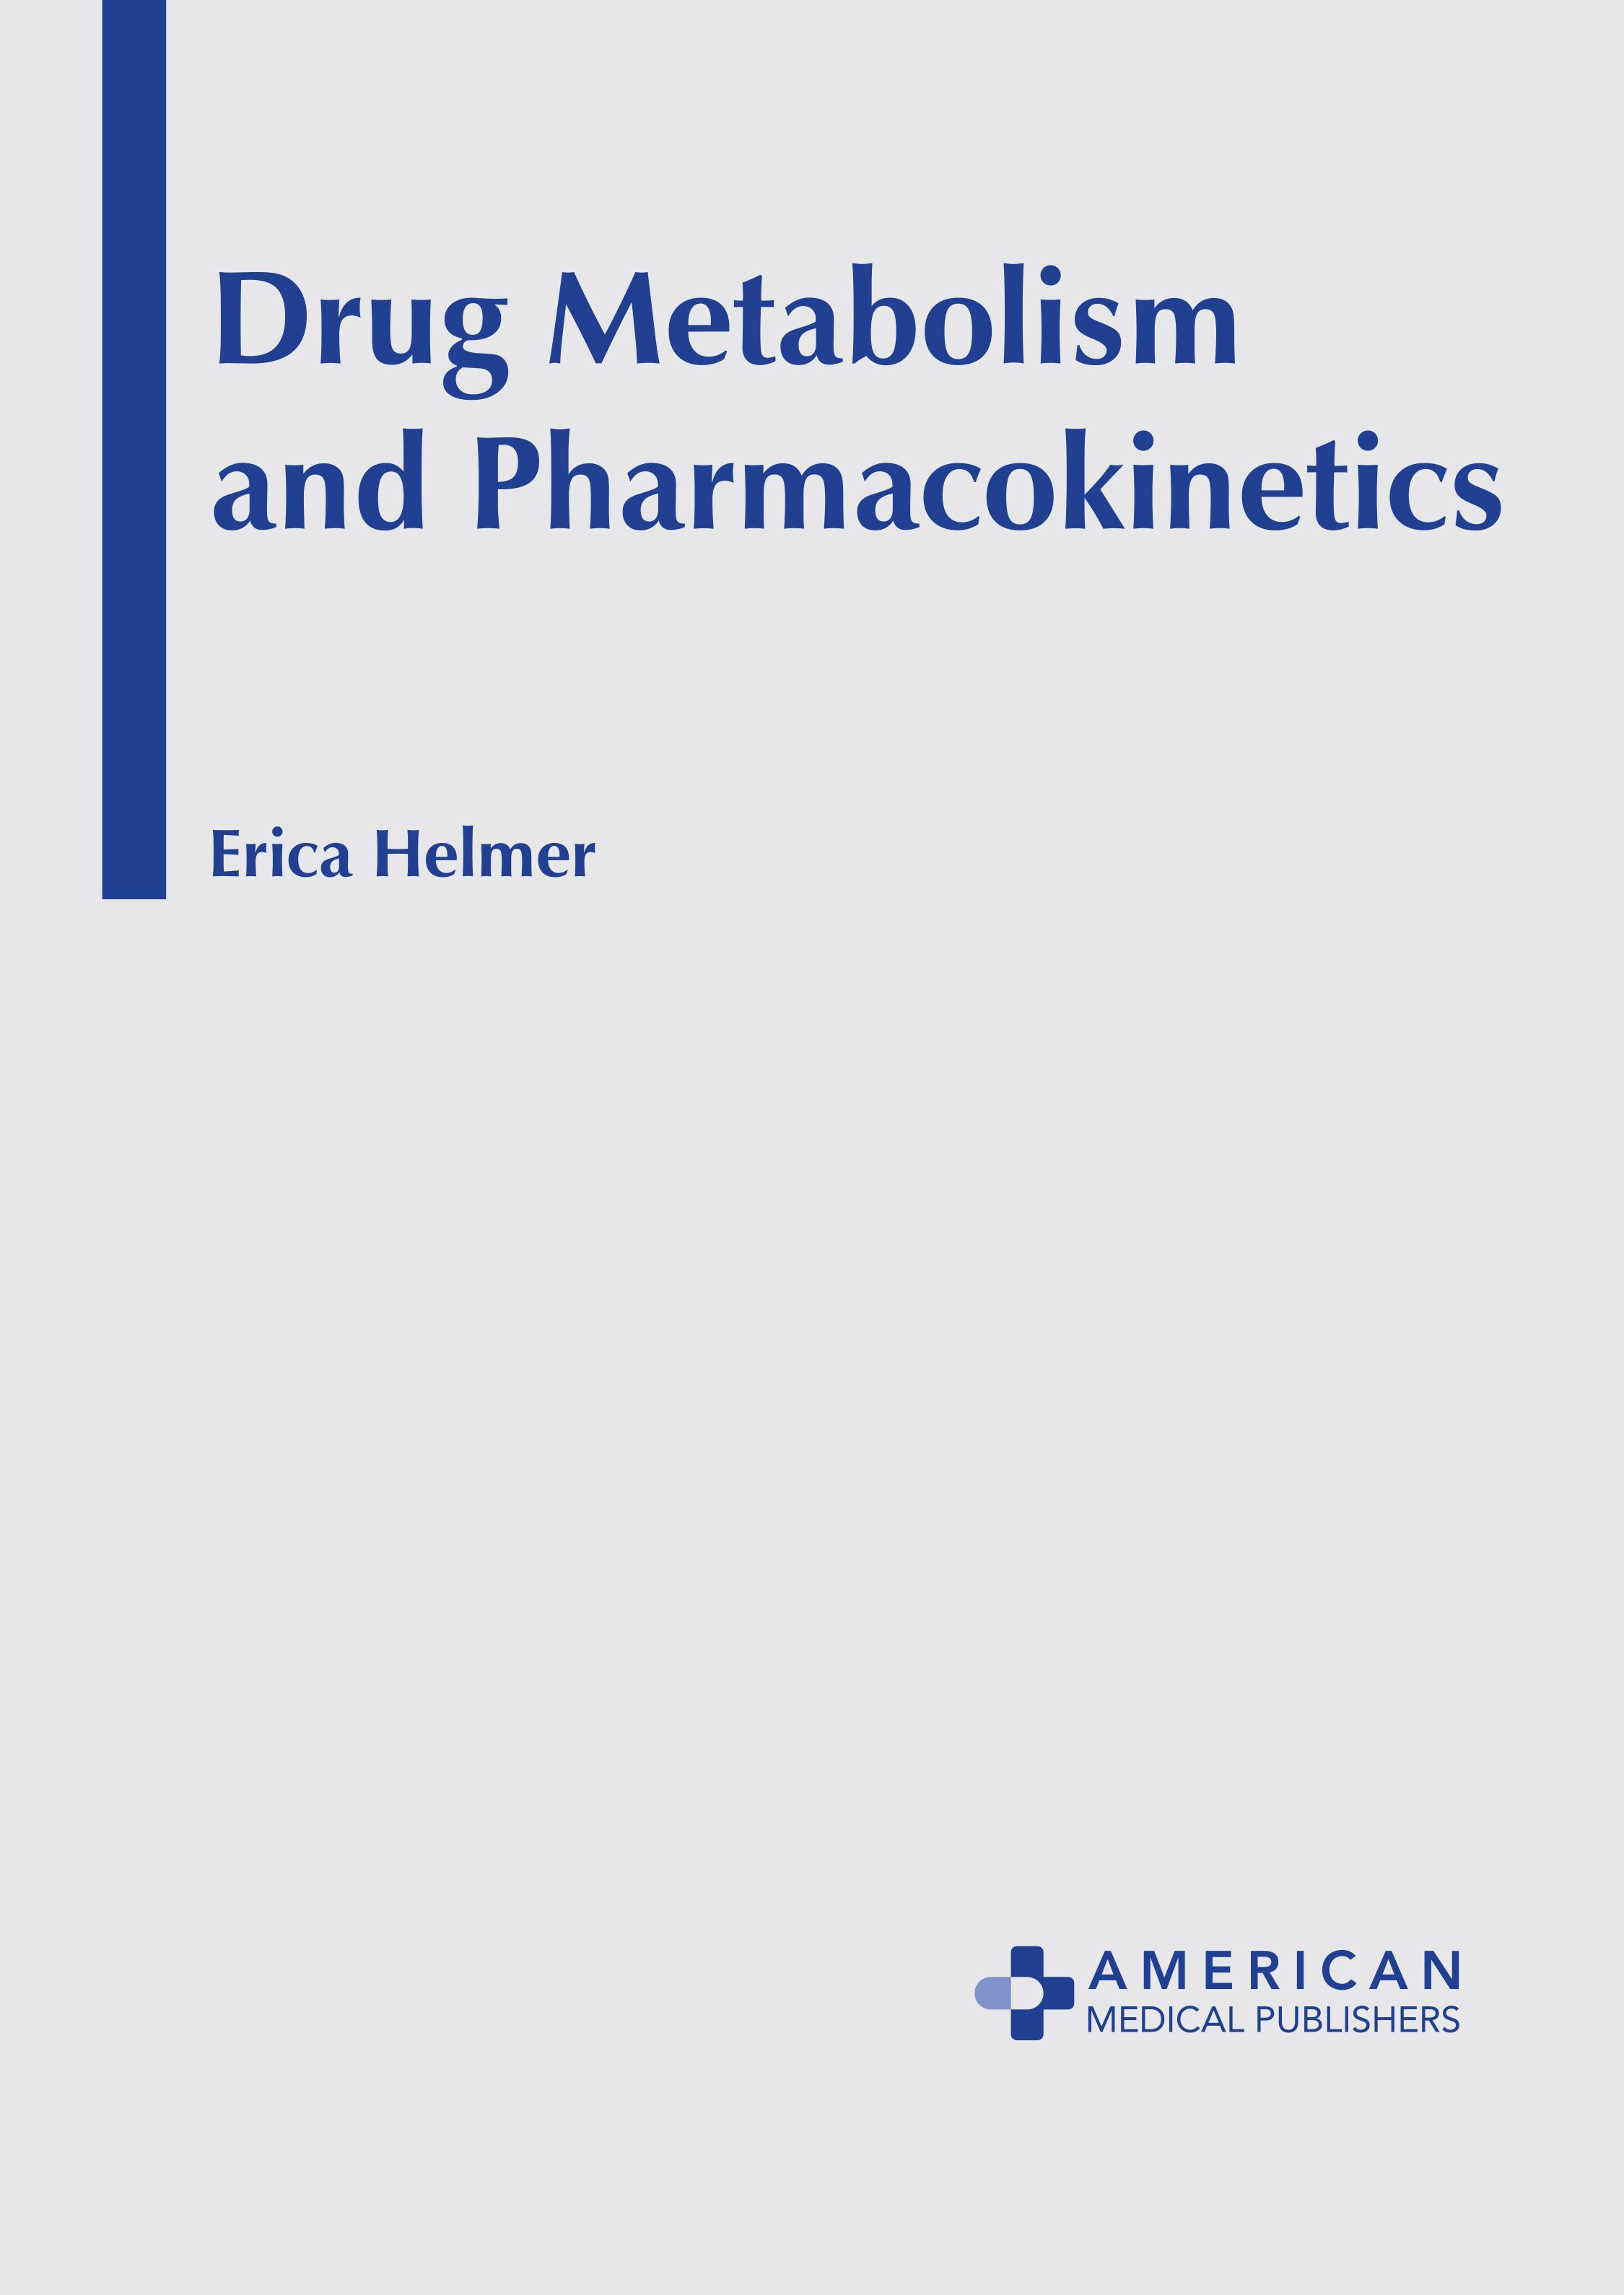 

exclusive-publishers/american-medical-publishers/drug-metabolism-and-pharmacokinetics-9798887400785